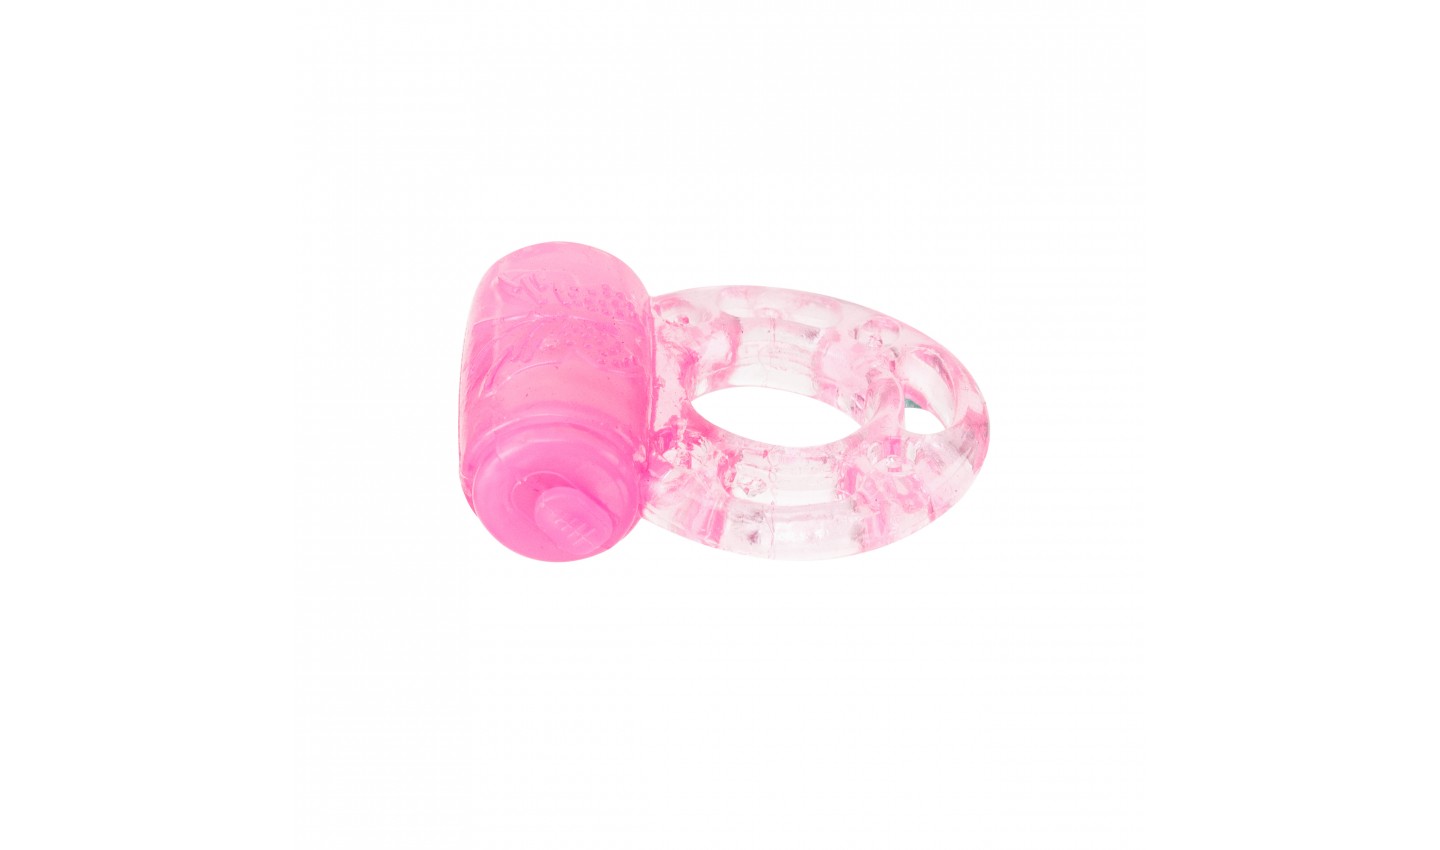 Кольцо эрекционное с вибрацией, 1 режим, гелевое, розовое, 4,5х3,5 см (БЕЗ КОРОБКИ)